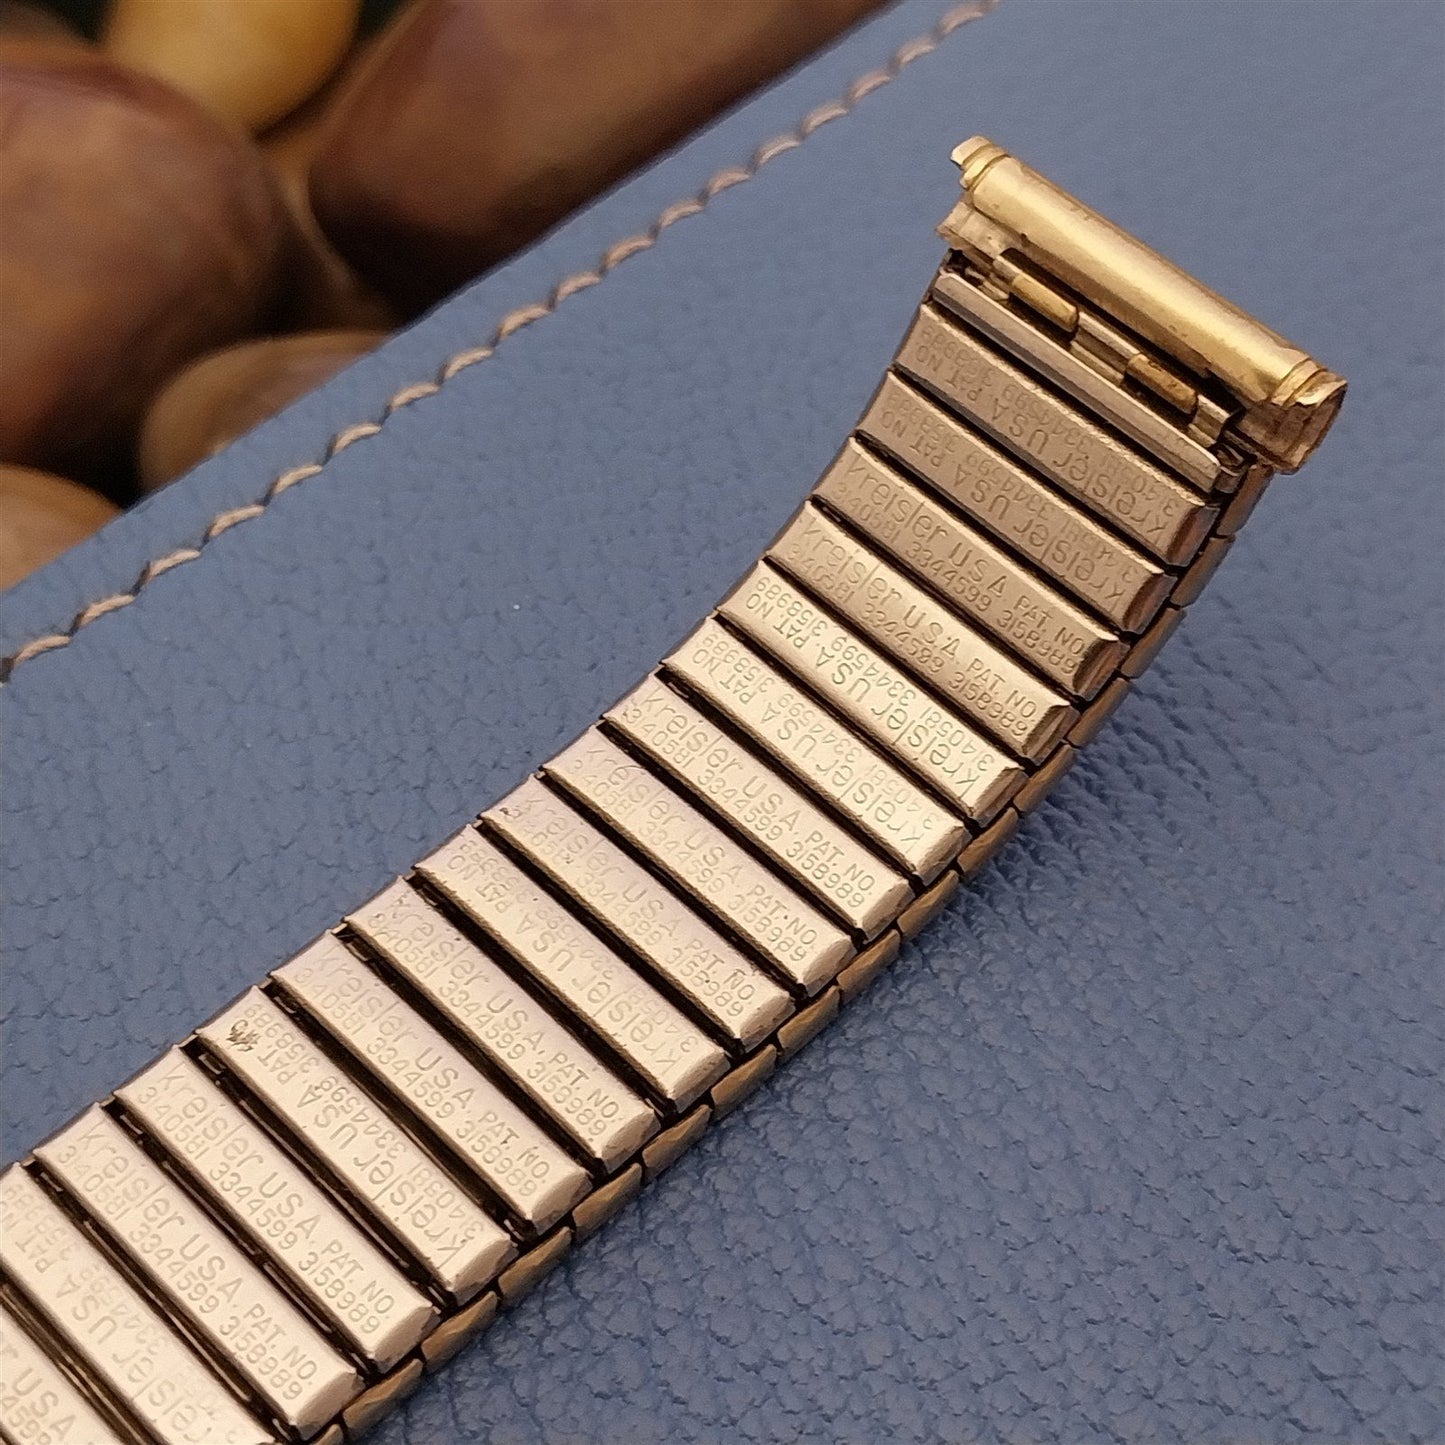 19mm 18mm 17mm Kreisler Classic 10k Gold-Filled Stretch 1960s Vintage Watch Band